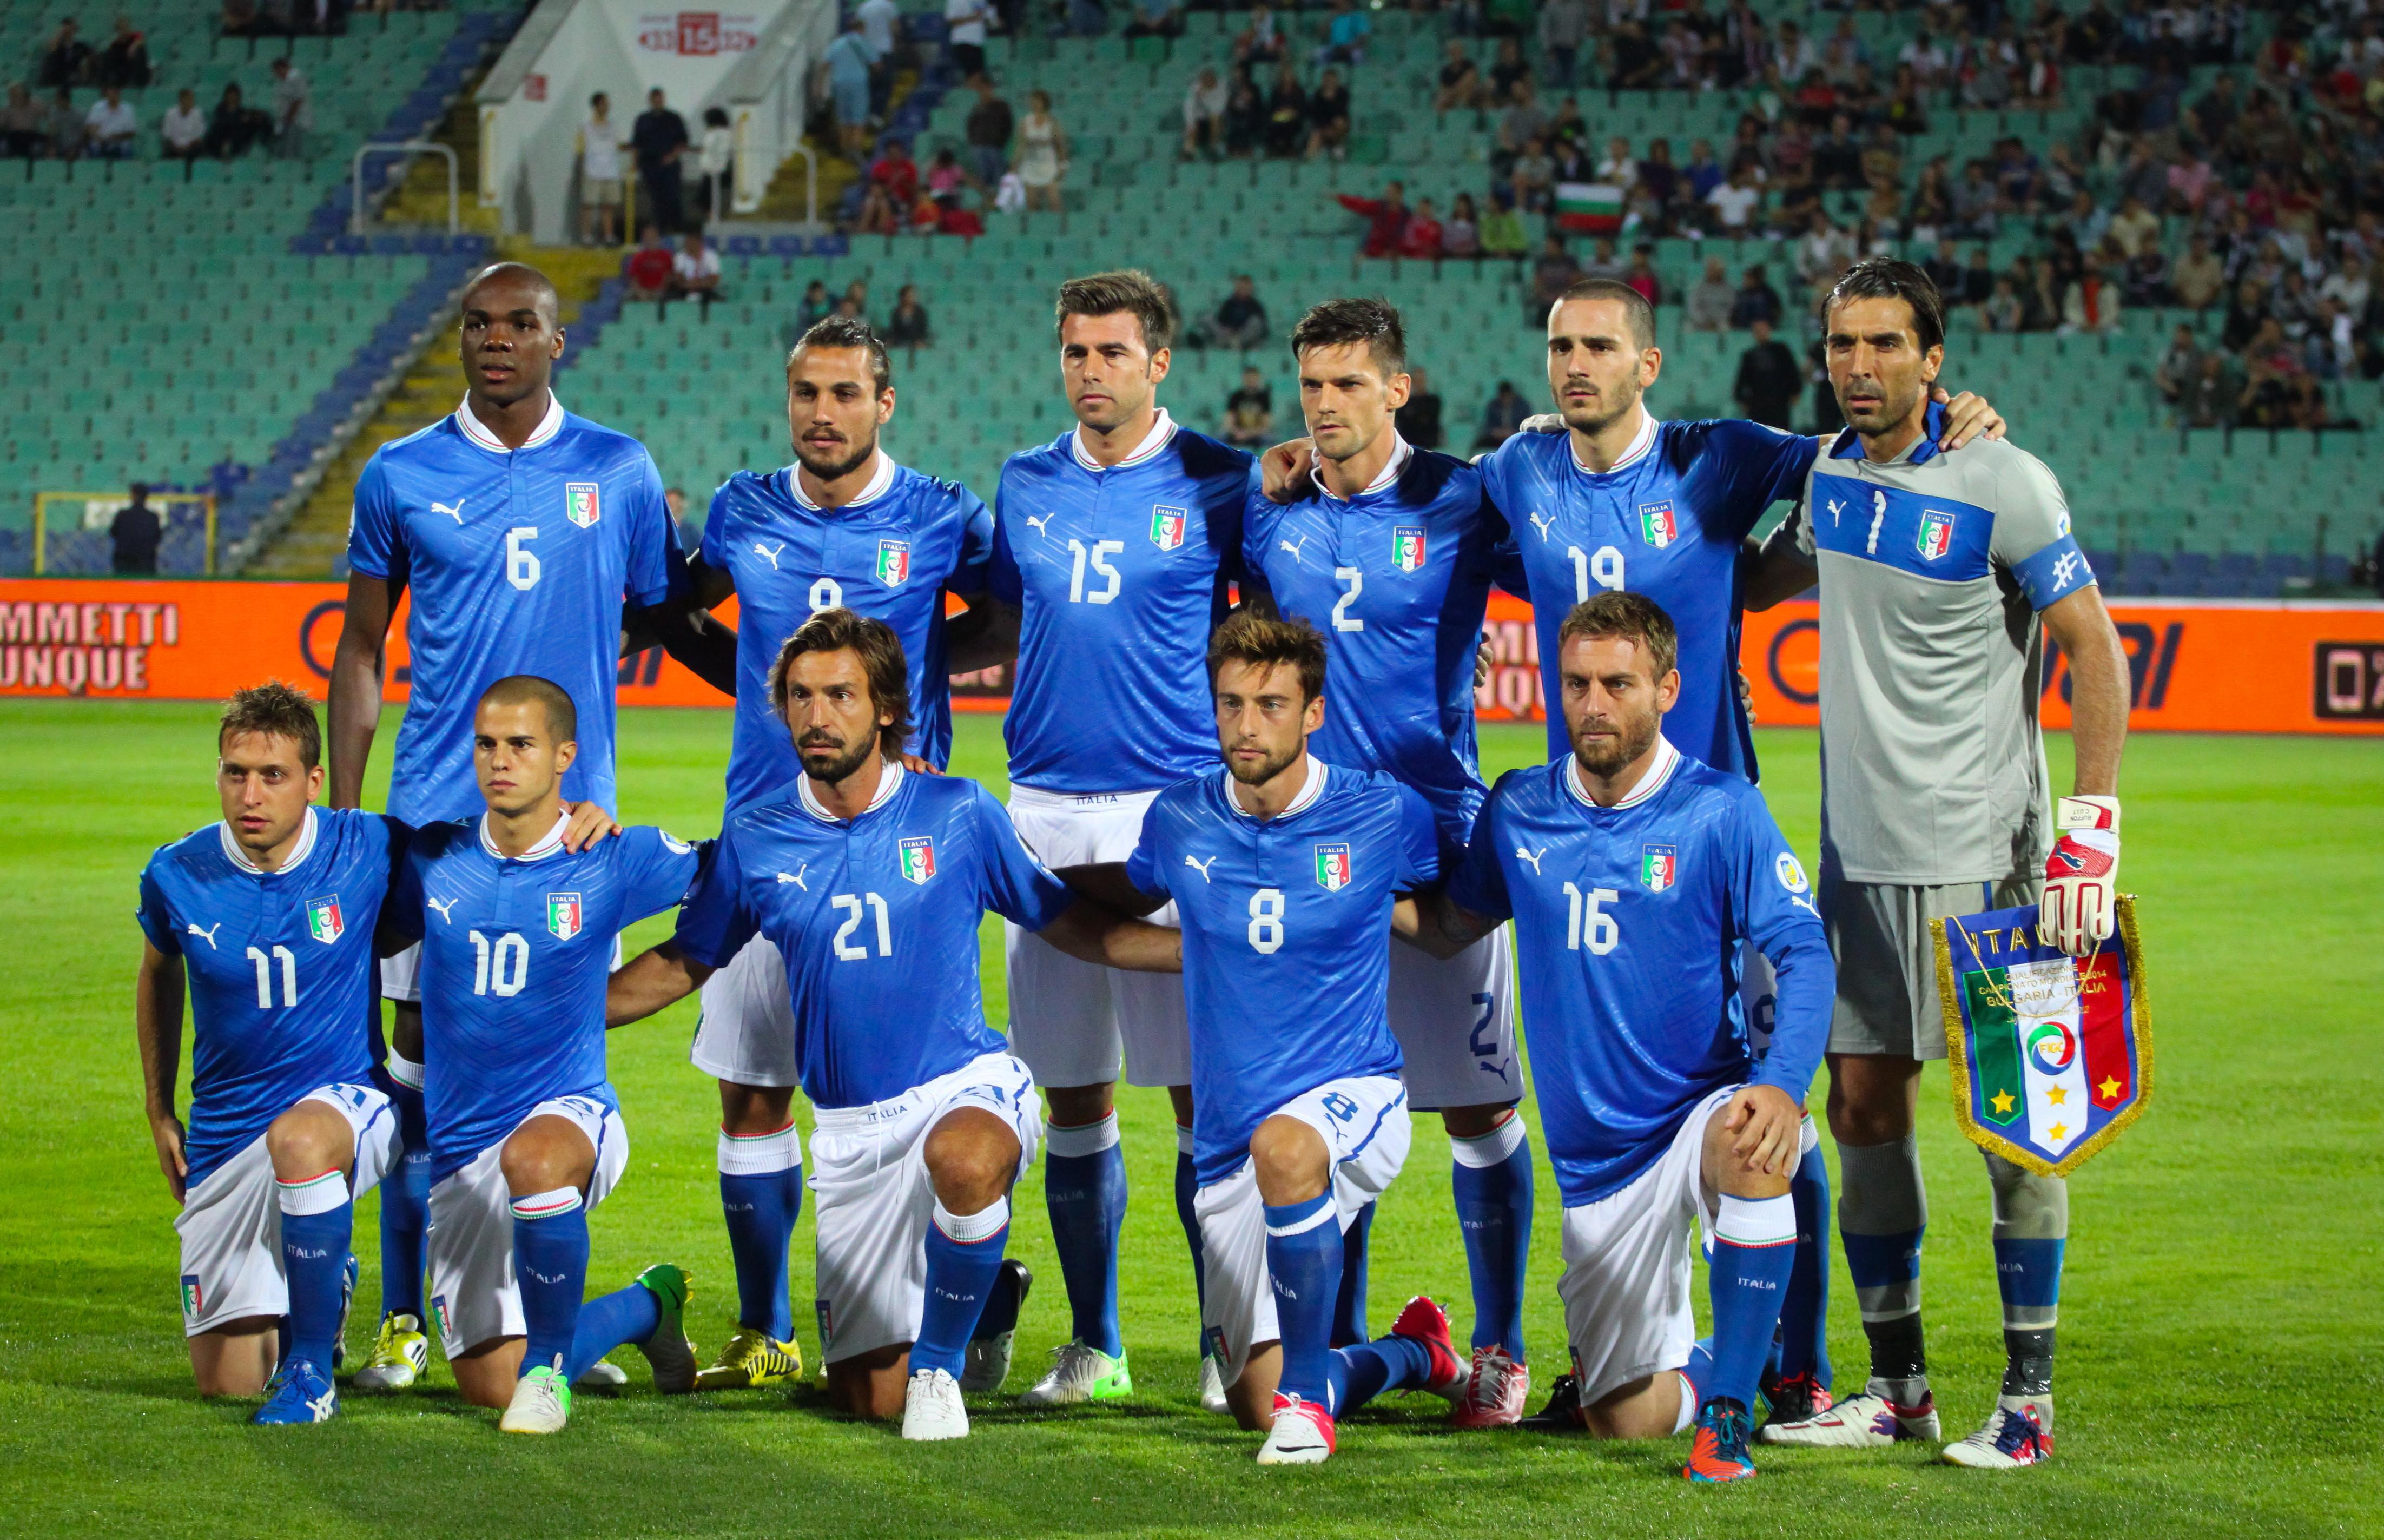 состав италии по футболу